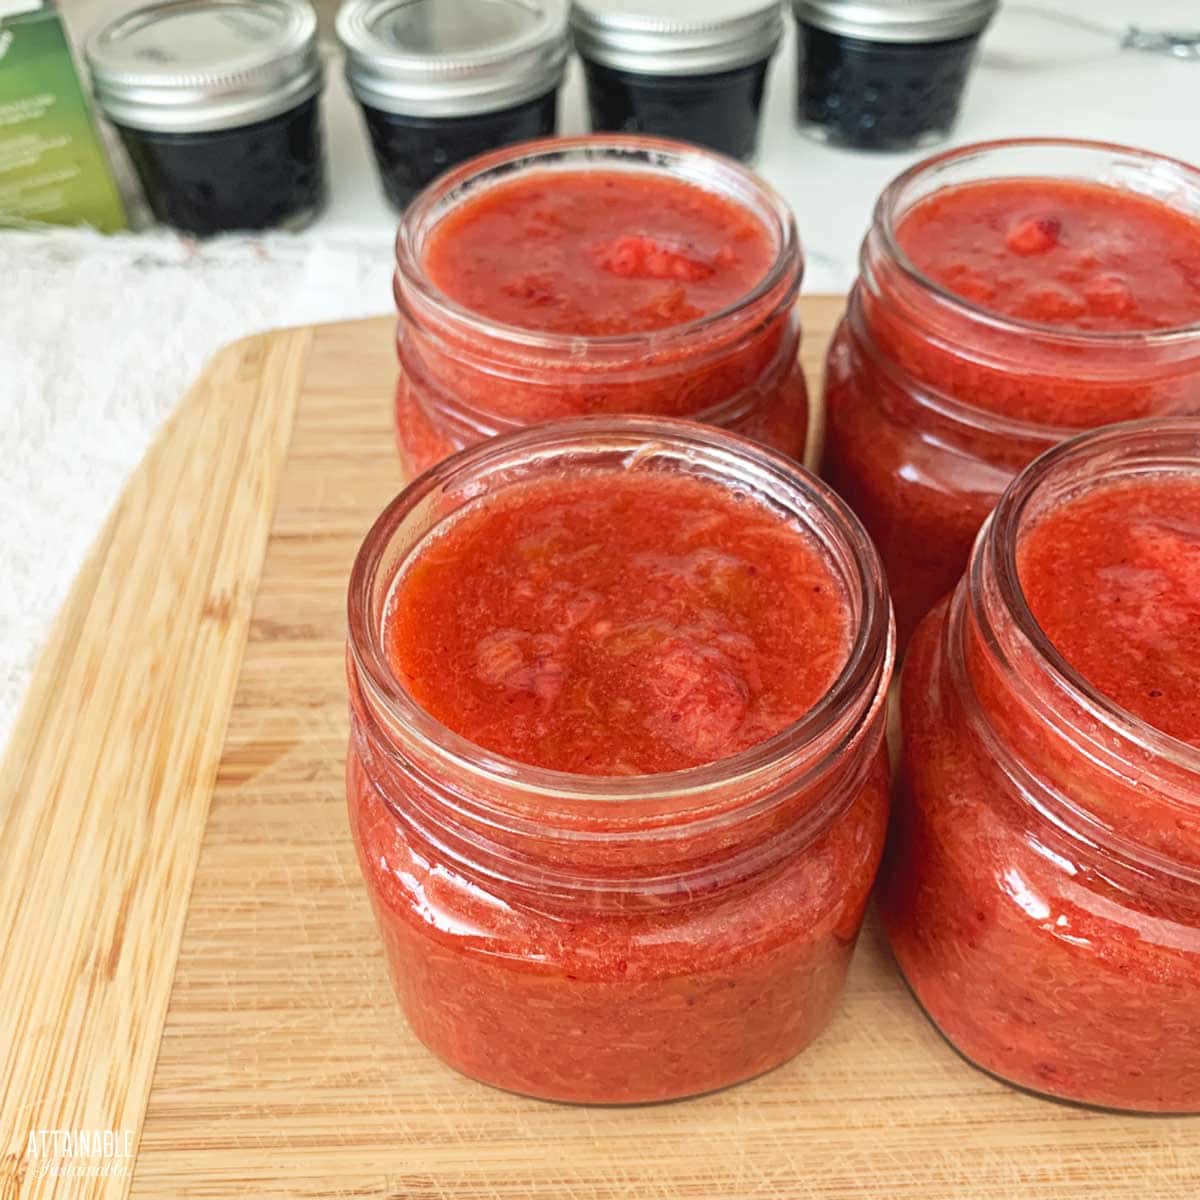 4 jars of strawberry rhubarb jam, no lids.